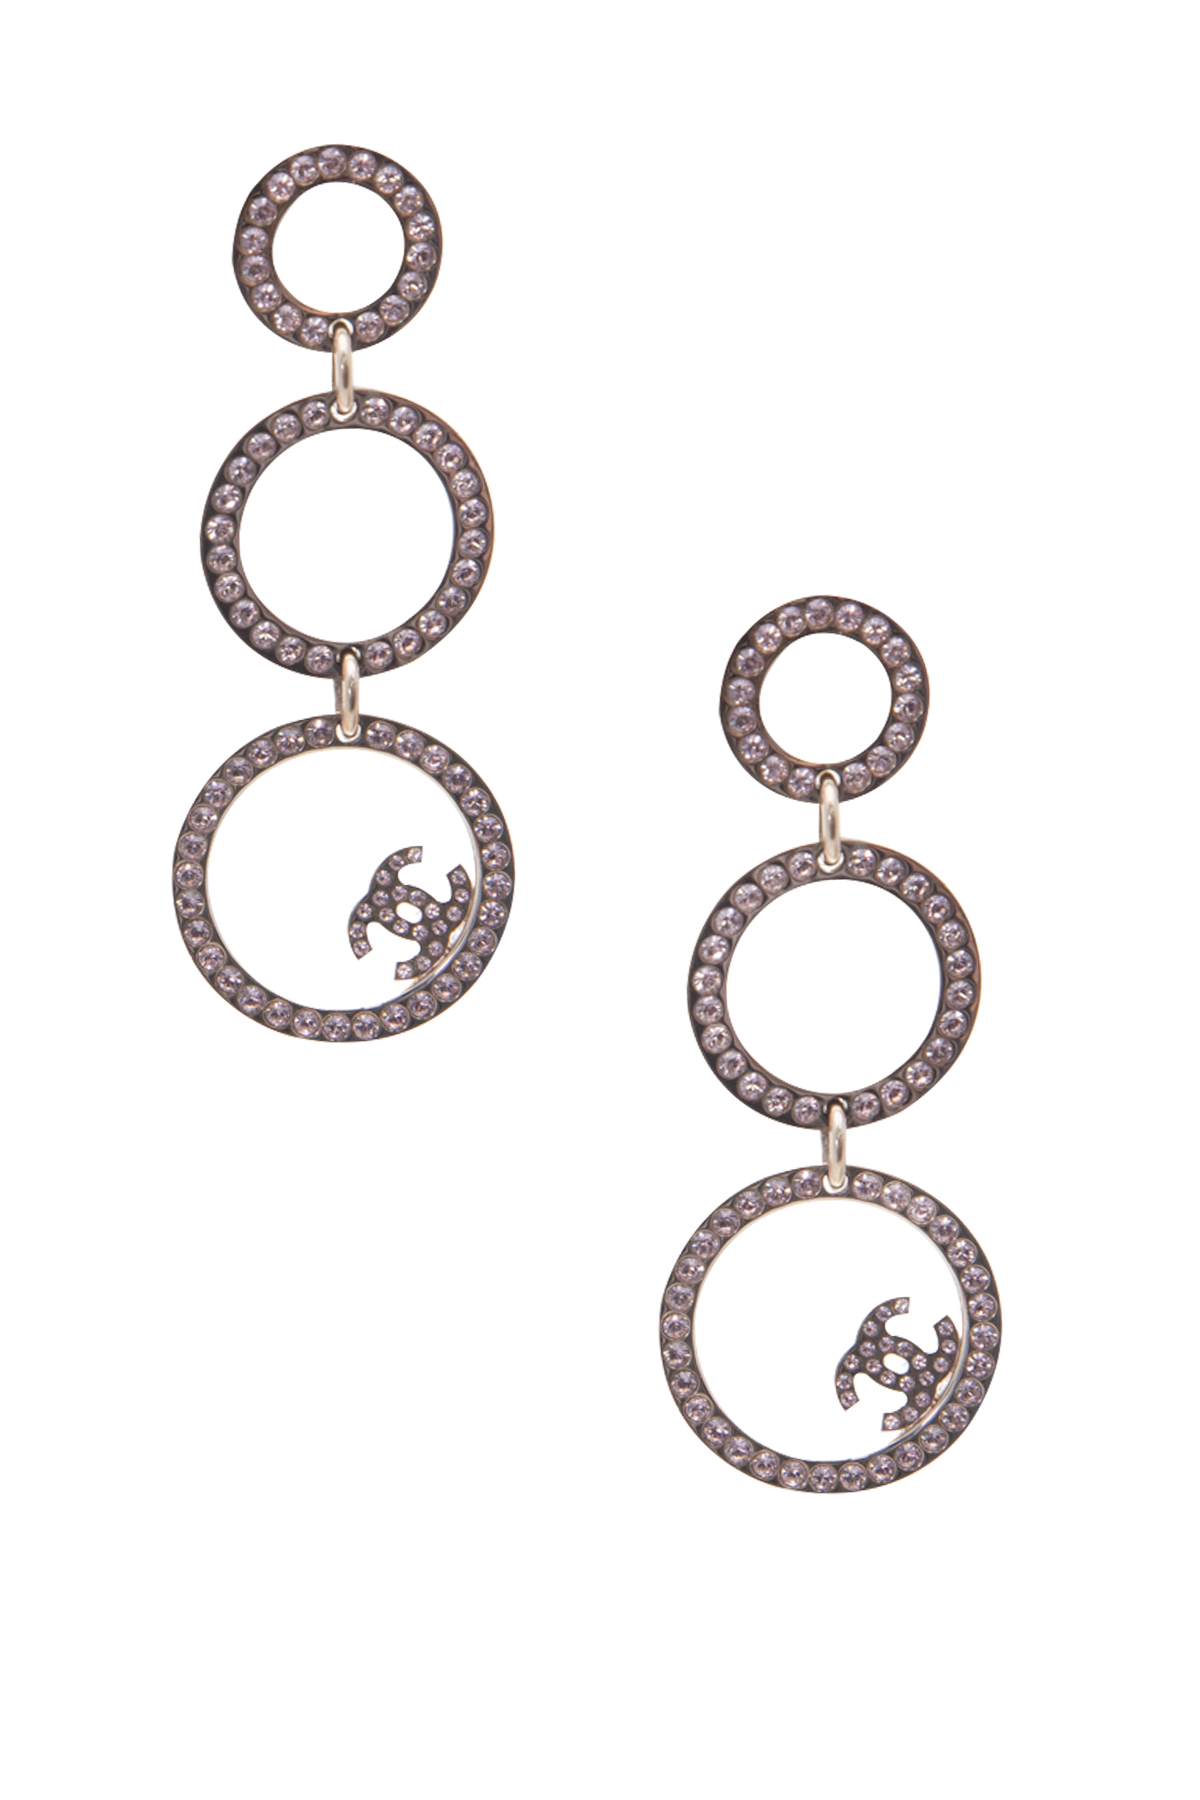 Chanel Rainbow Crystal CC Logo Dangle Earrings